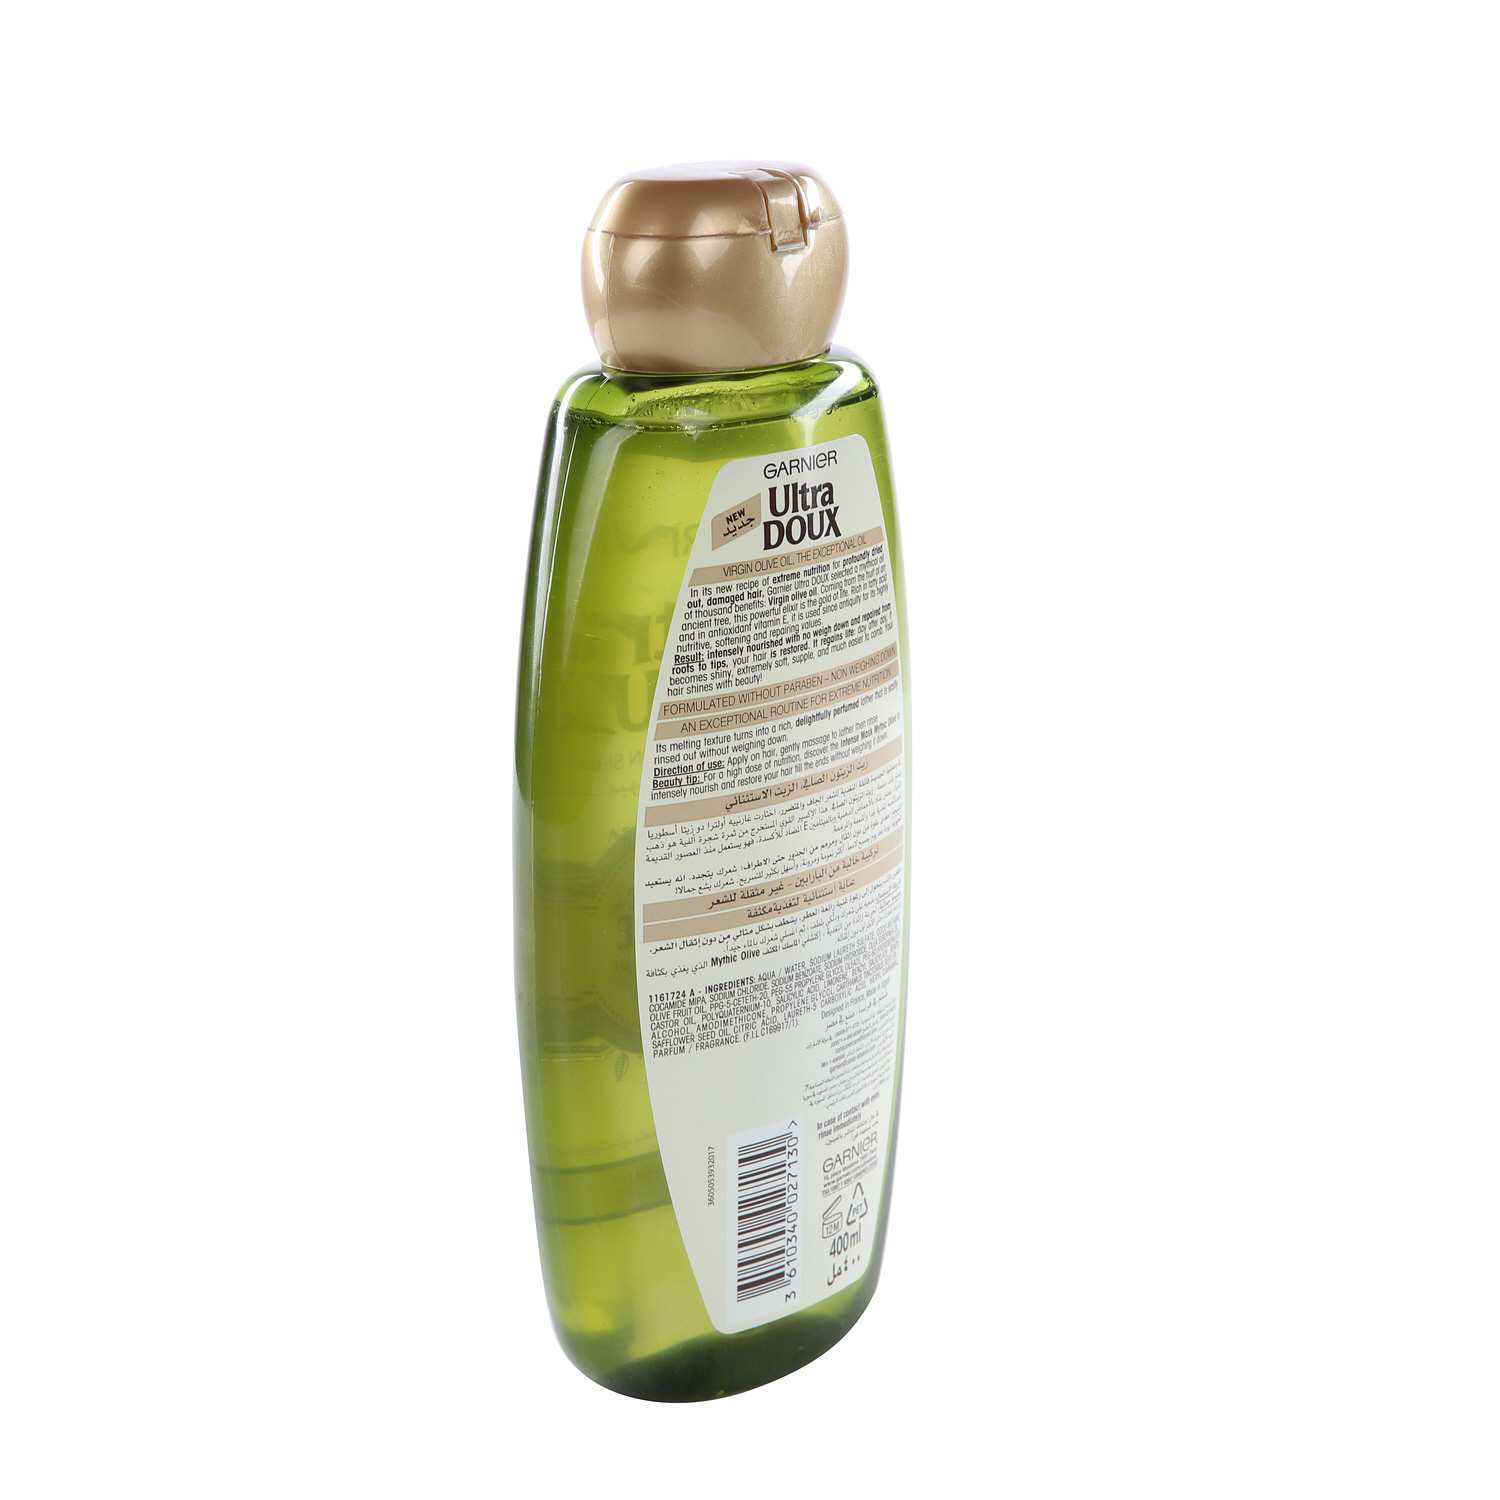 Garnier ULtra Doux Olive Mythique Shampoo 400ml